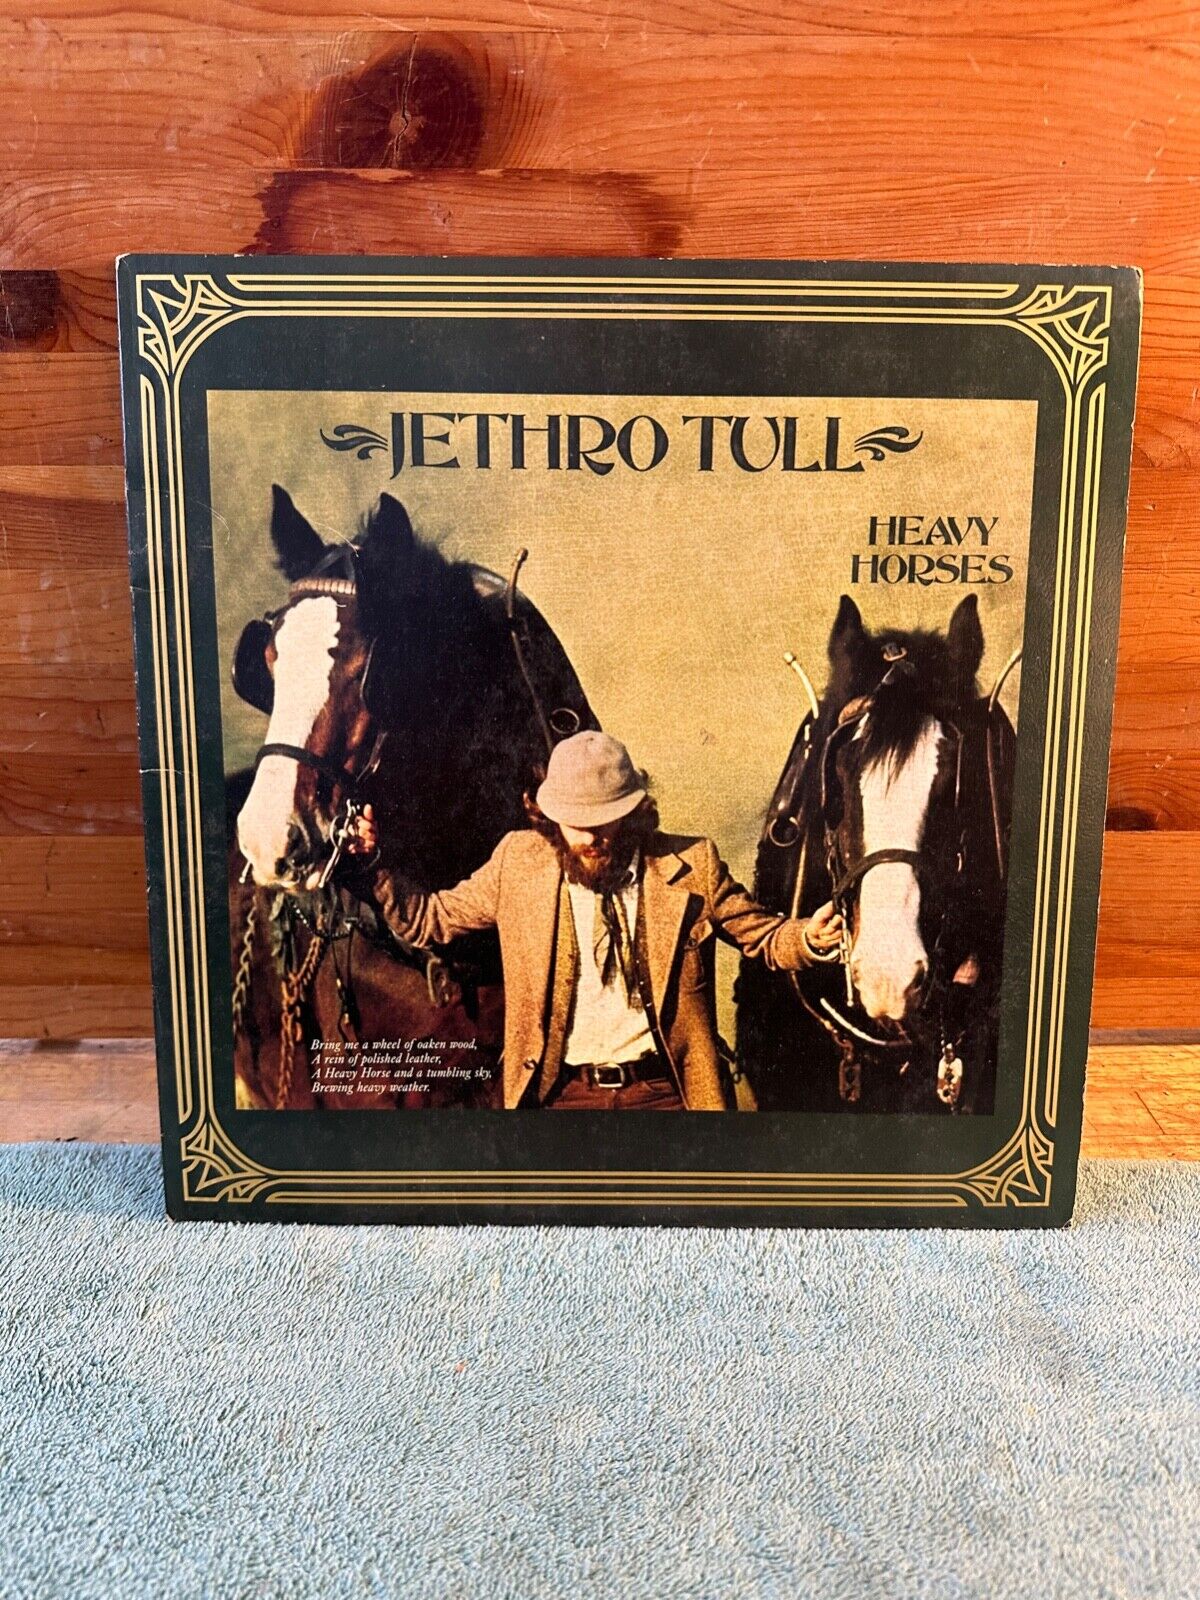 LP Vinyl Record Jethro Tull Heavy Horses Record CHR-1175 Vintage